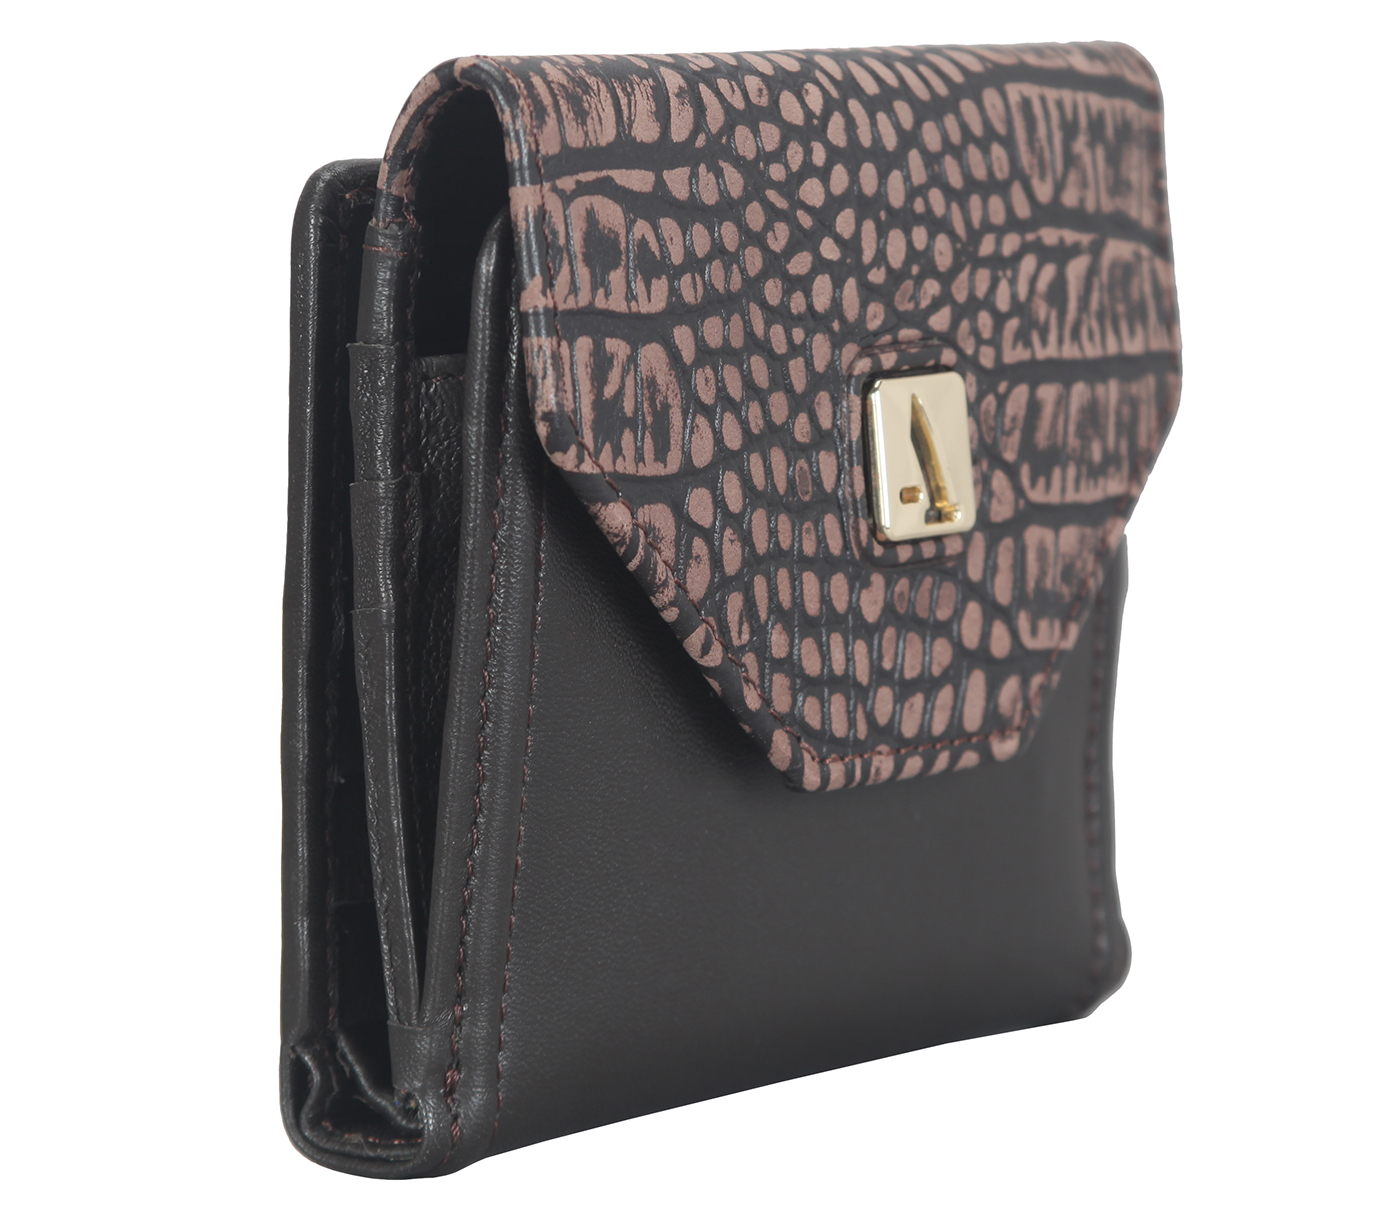 Wallet-Carolina-Women's bifold wallet in Genuine Leather - Brown